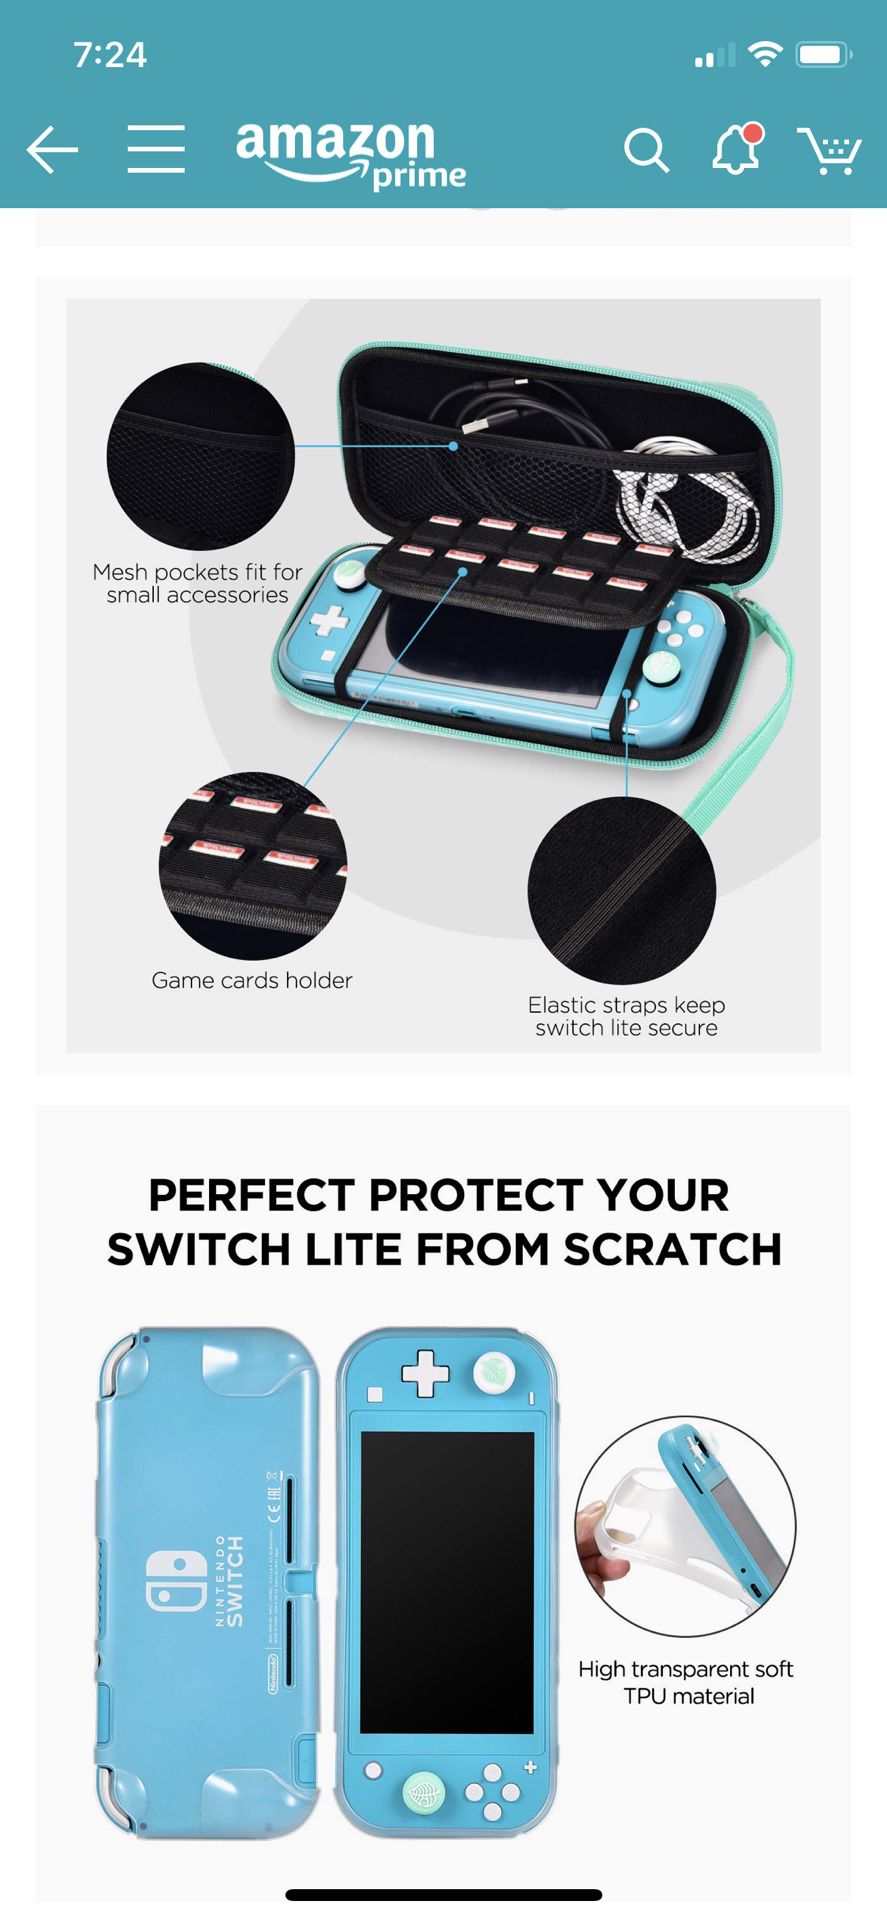 Nintendo Switch Lite accessories kit